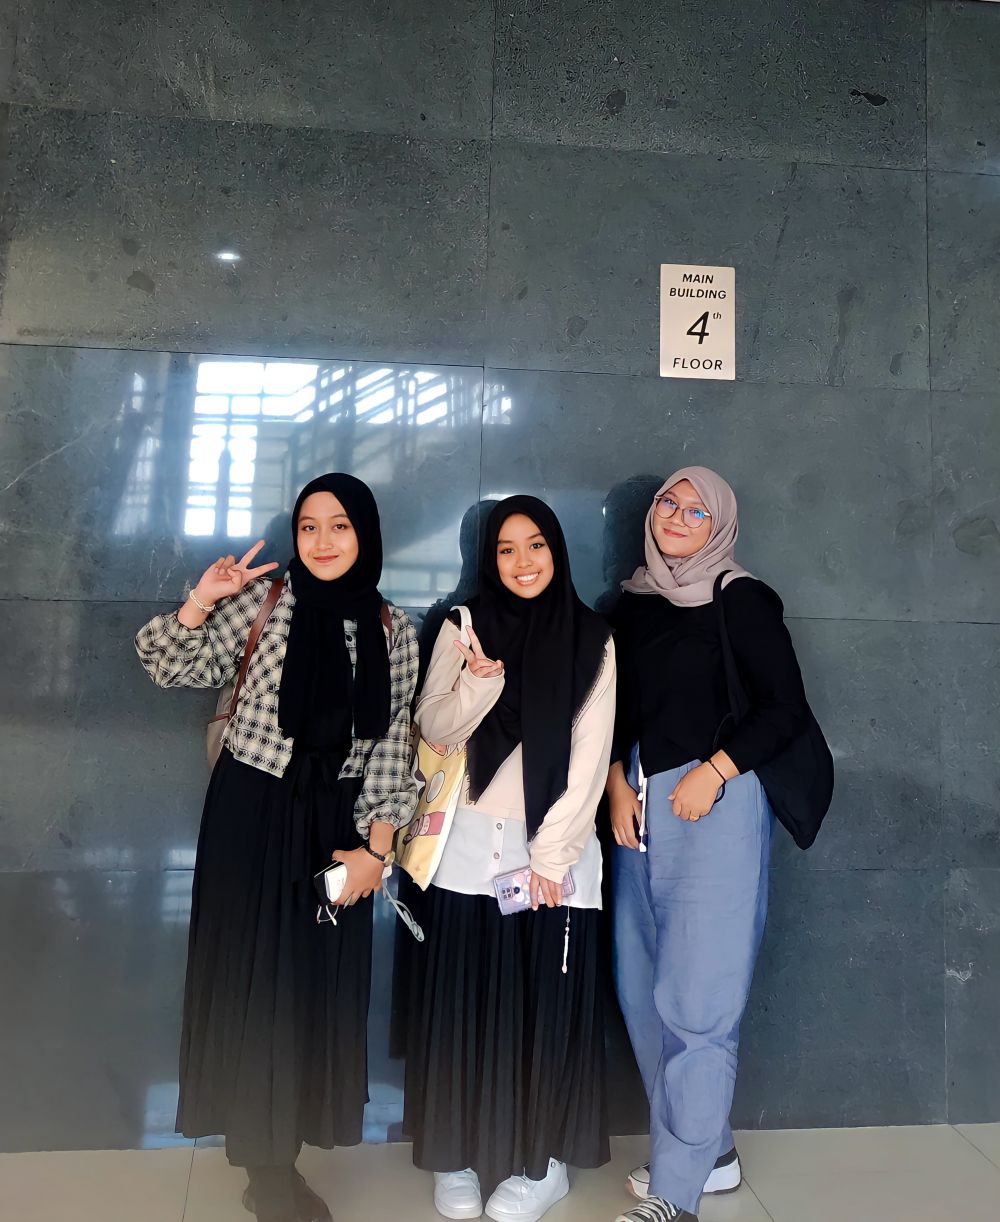 Amrina Mufidah Hanun, Gea Avanda S., Nisrina An-Nazihah 
(Mahasiswa Ilmu Komunikasi Universitas Ahmad Dahlan)
